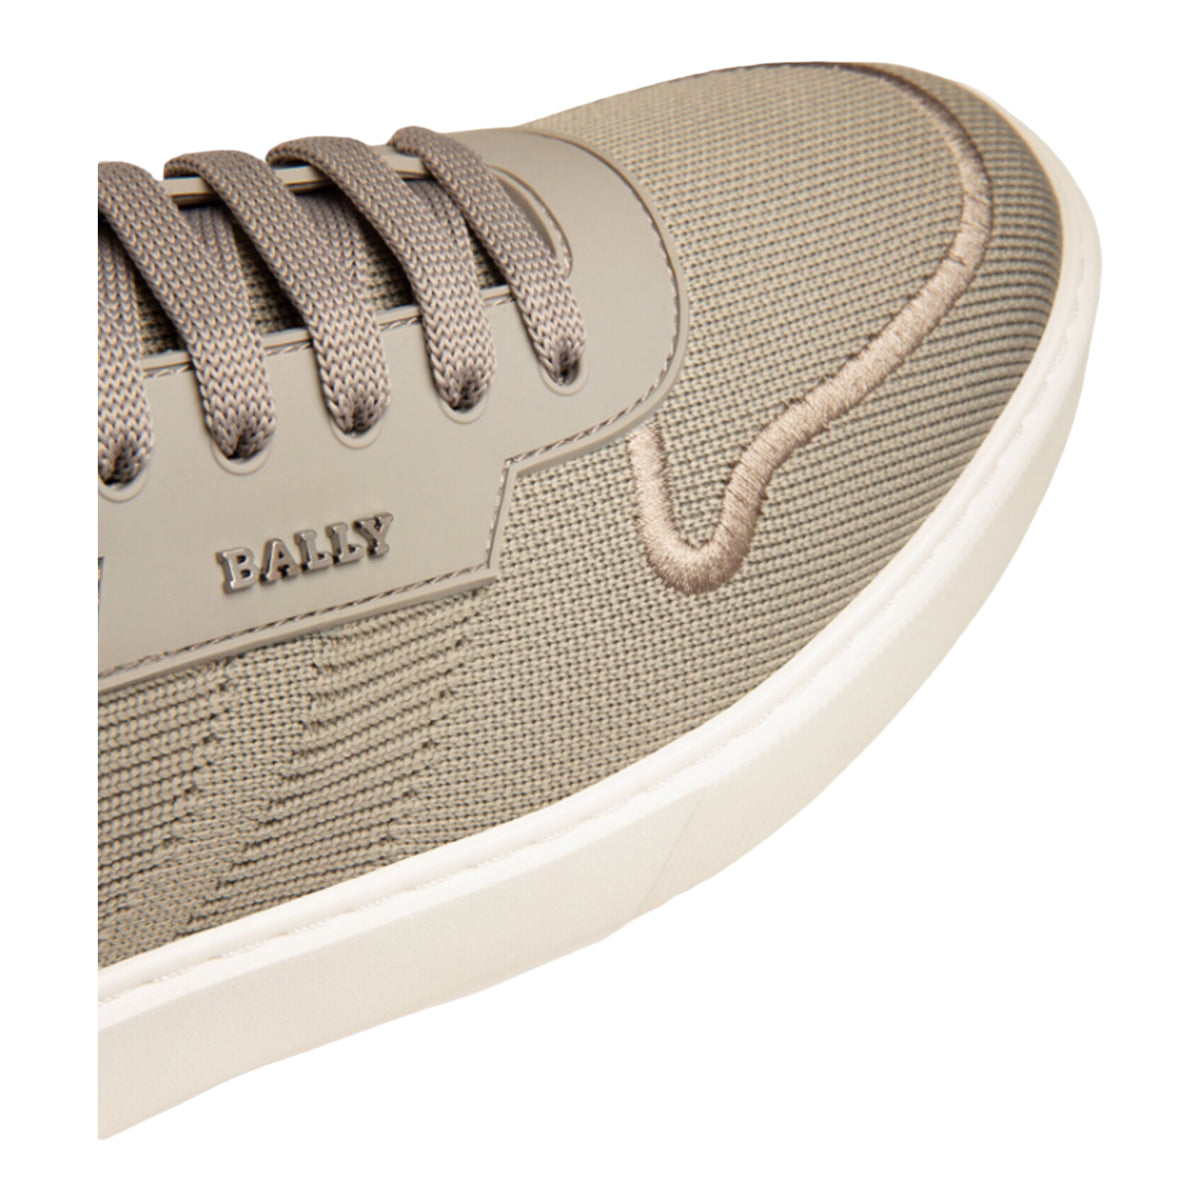 Bally Men's Macky Knit Fabric Sneakers